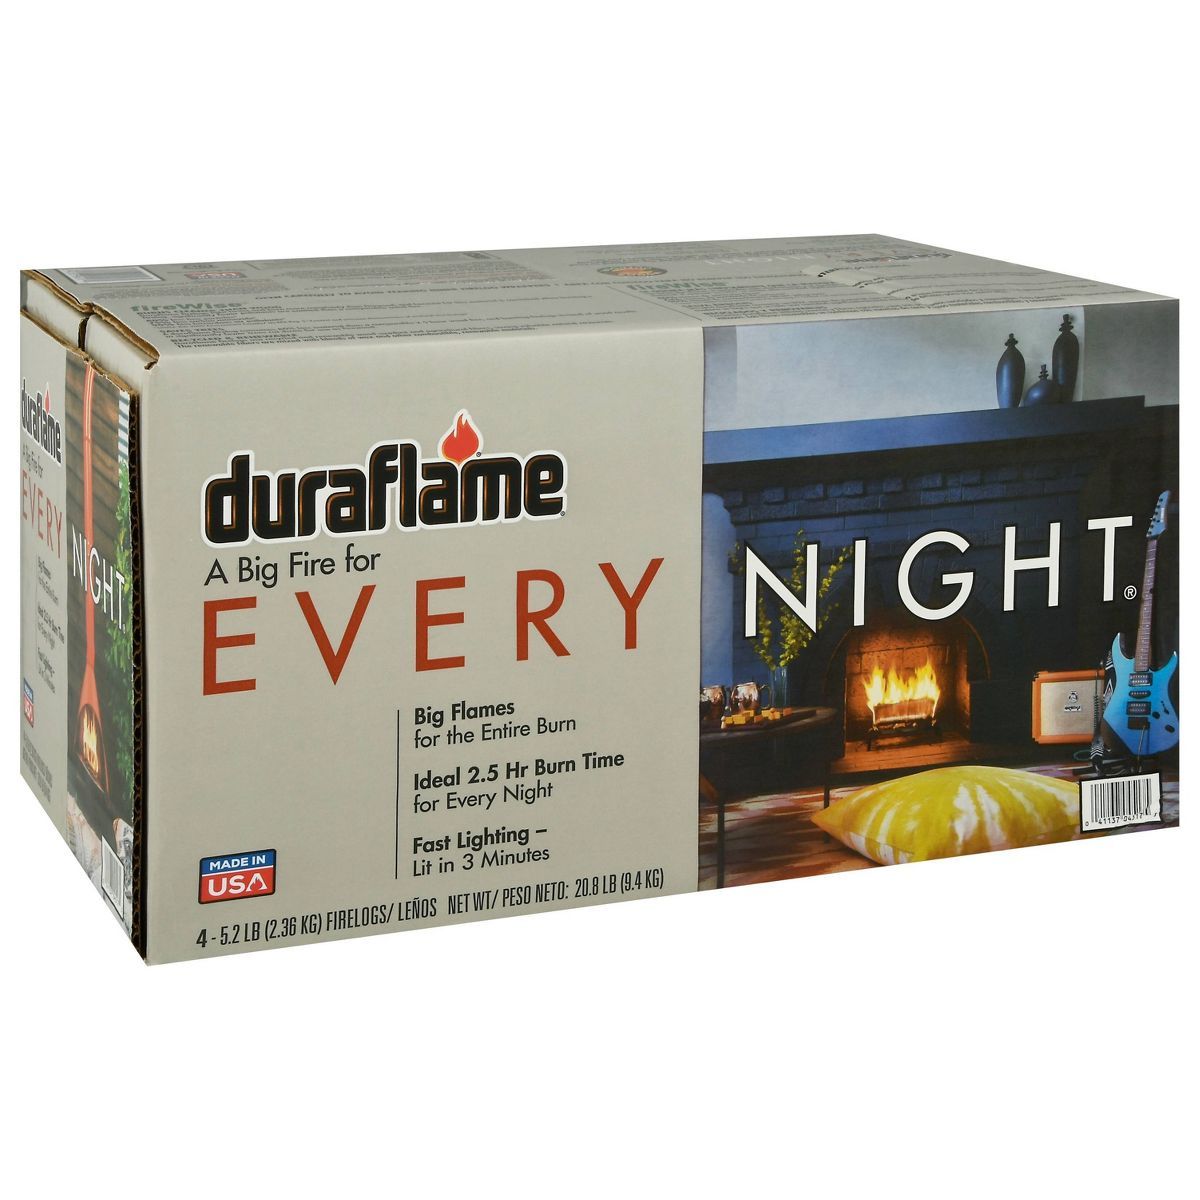 Duraflame 4pk 5.2lbs Every Night Firelogs | Target